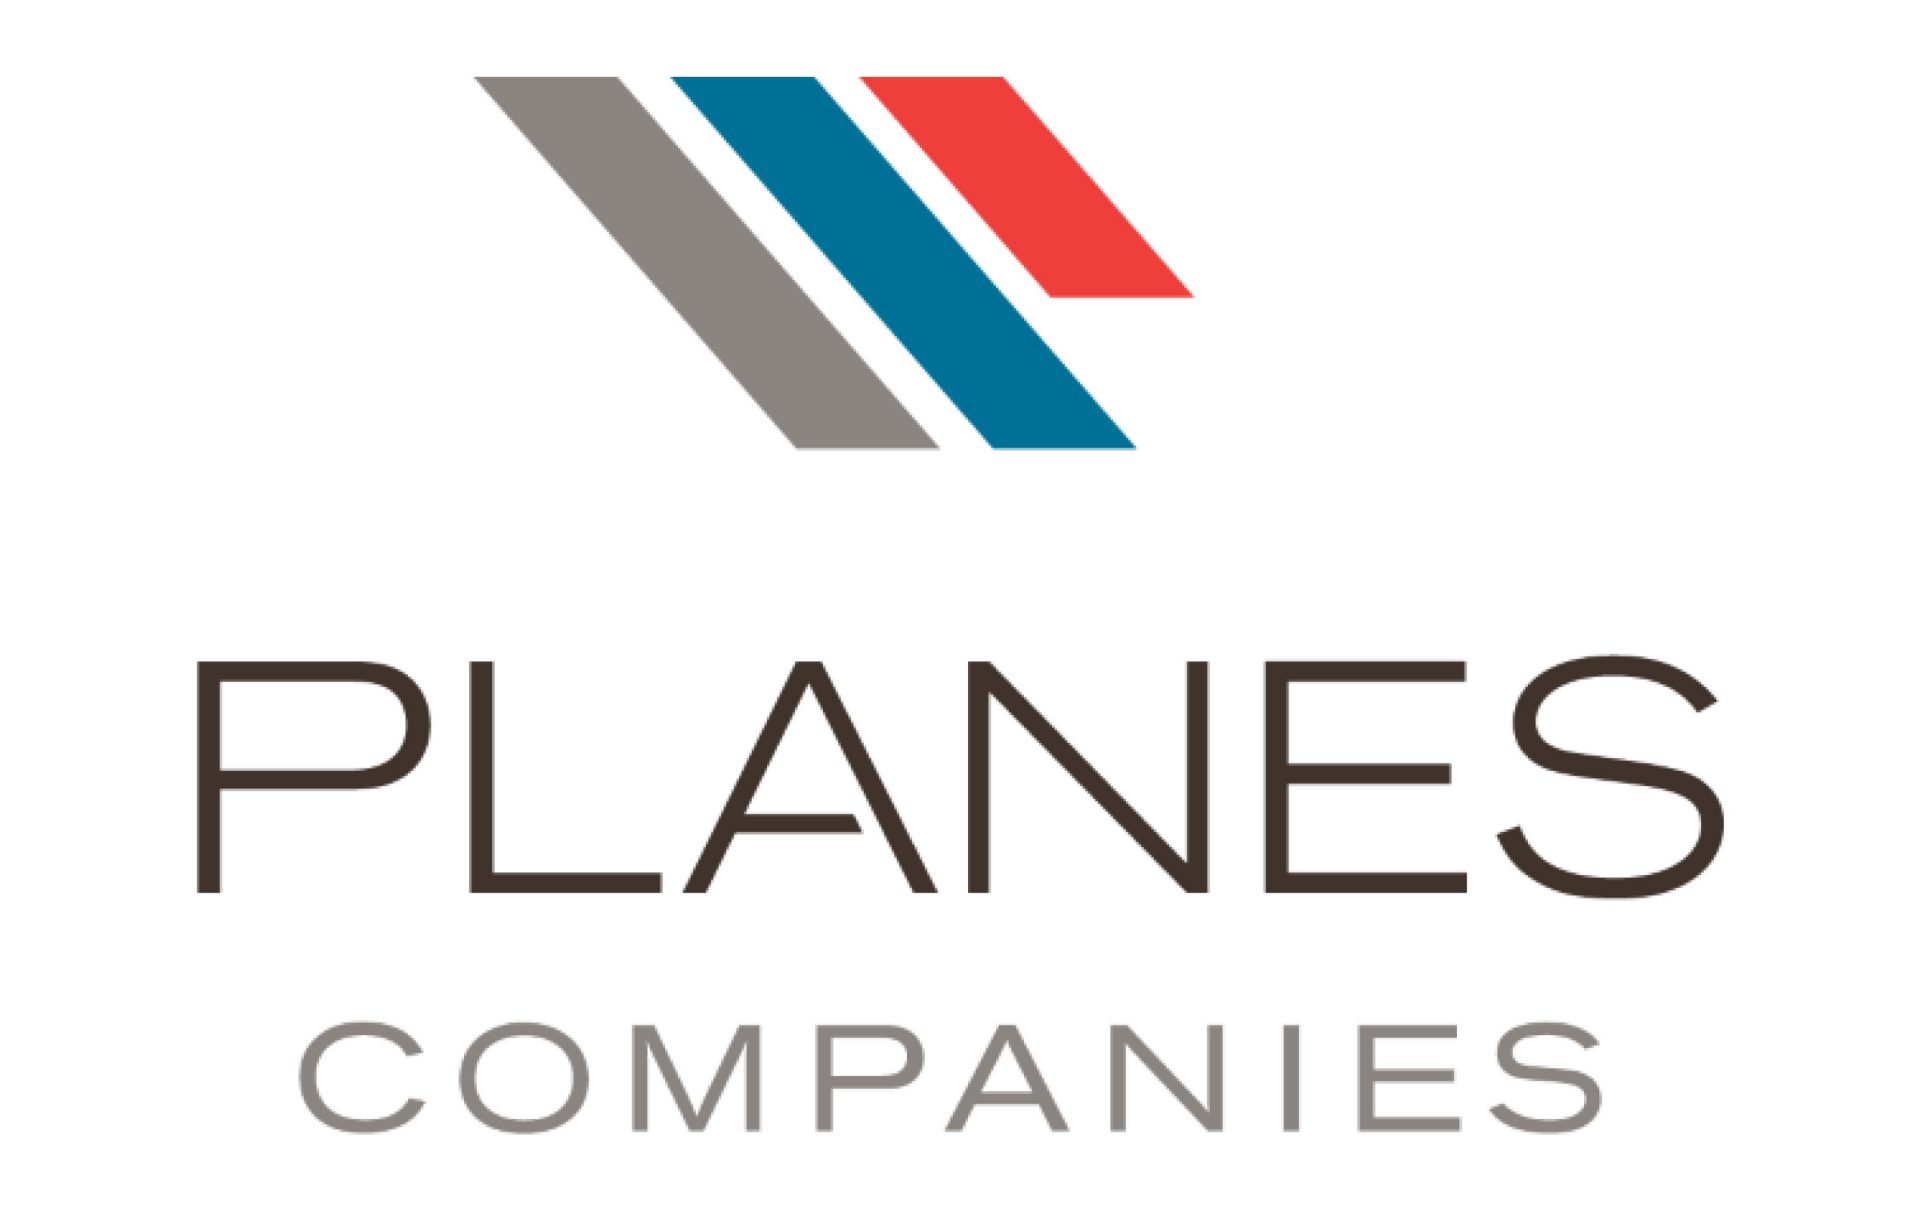 Planes Companies